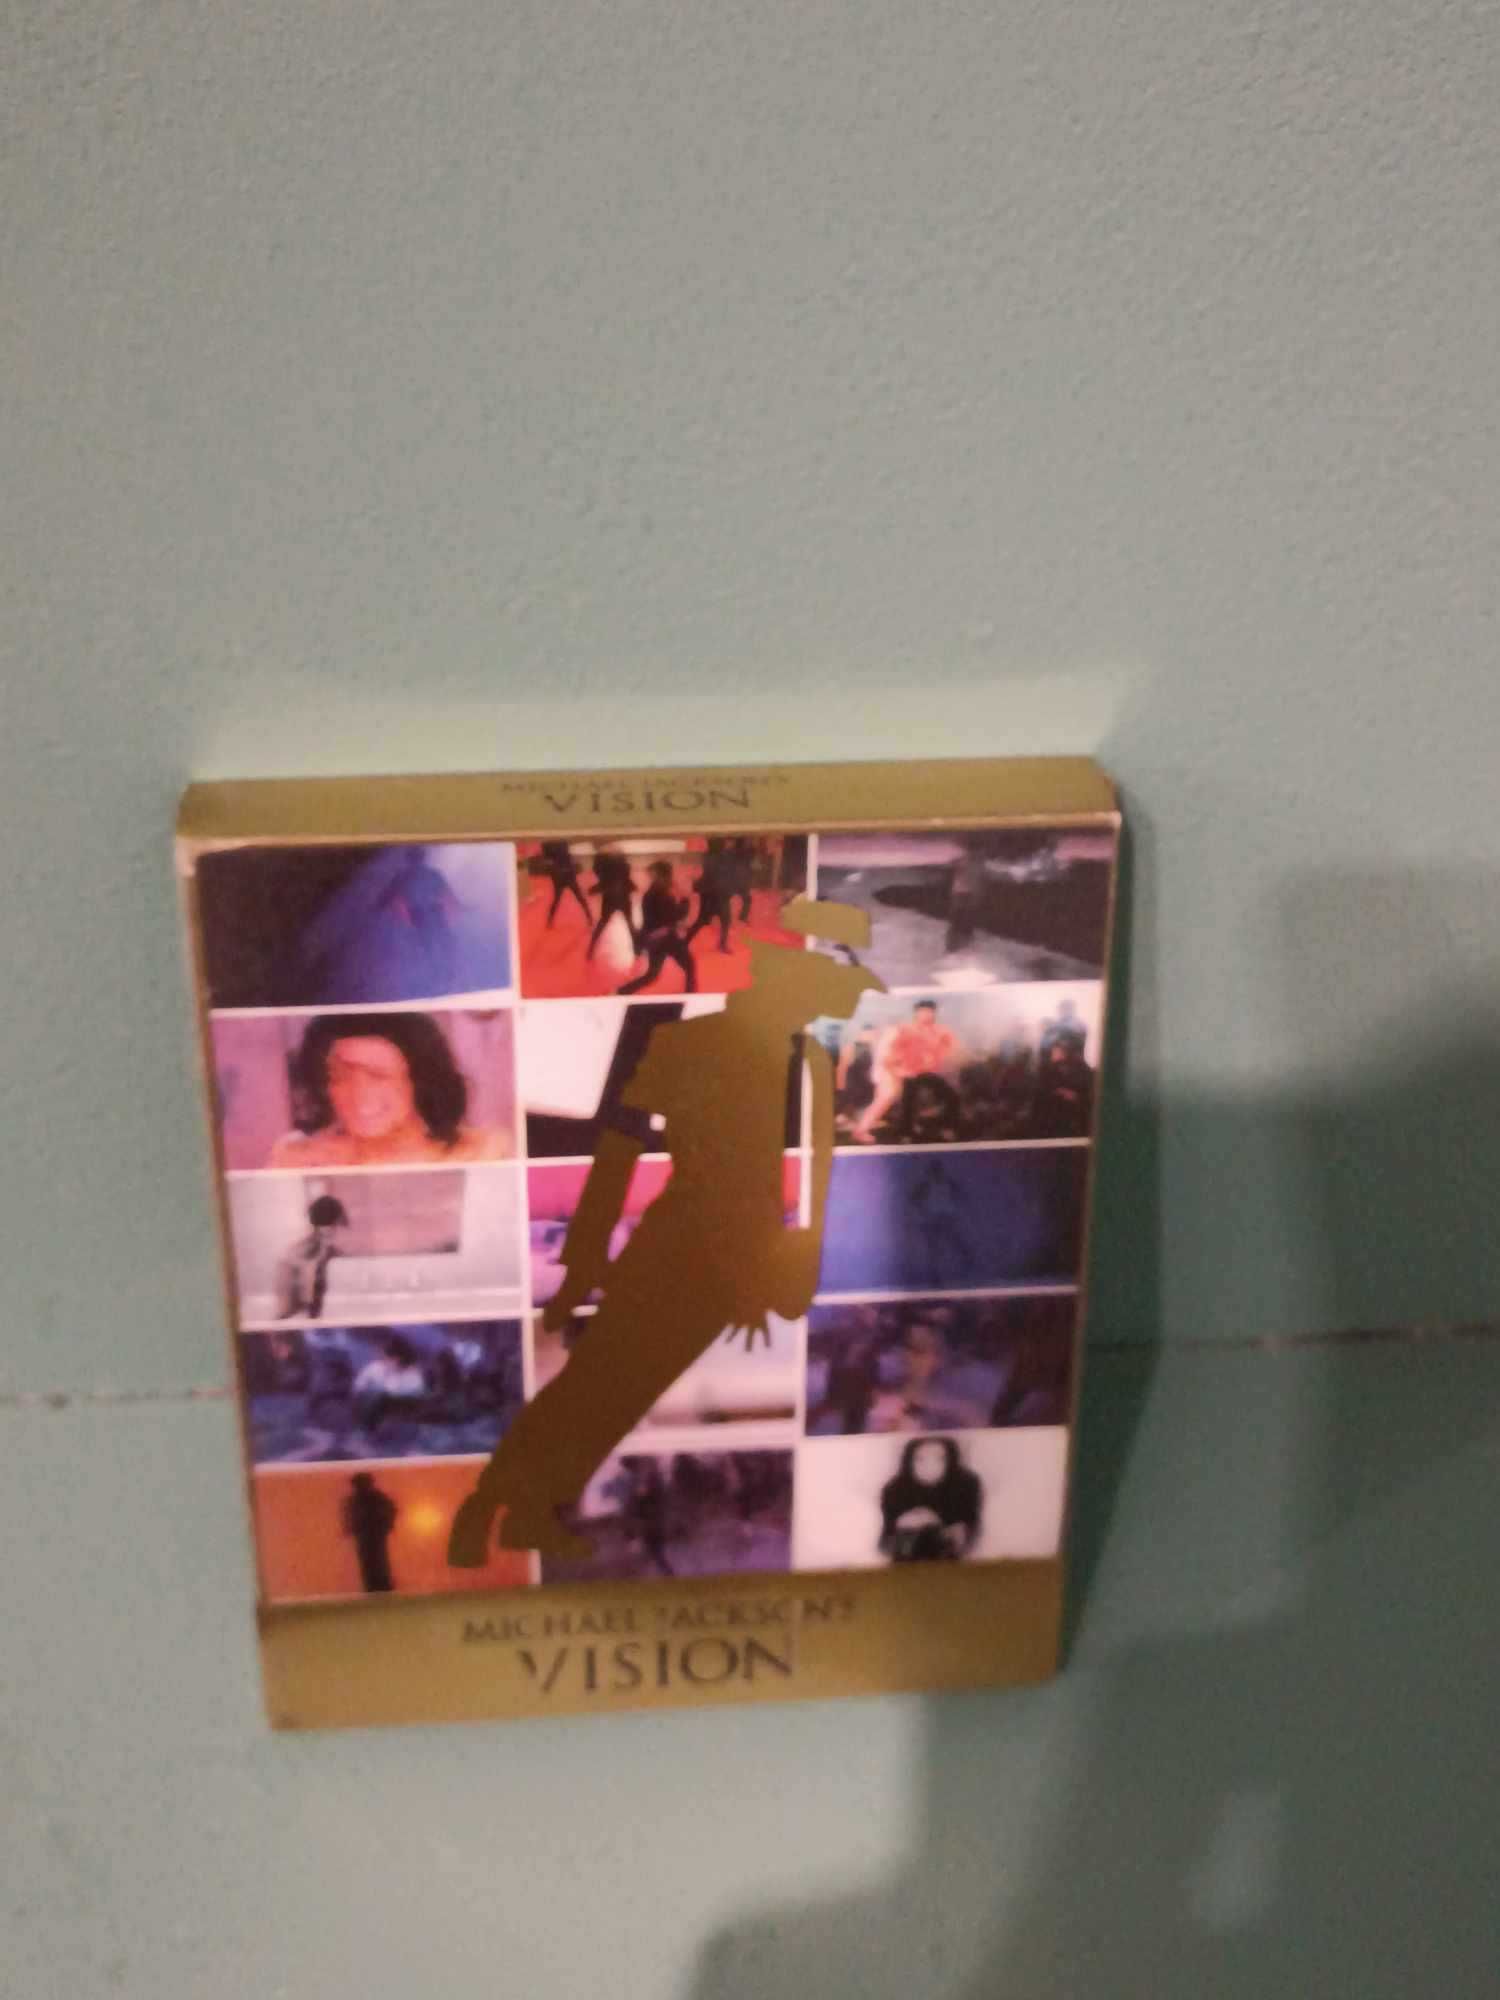 Album z 3 płytami cd - Michael Jackson Vision